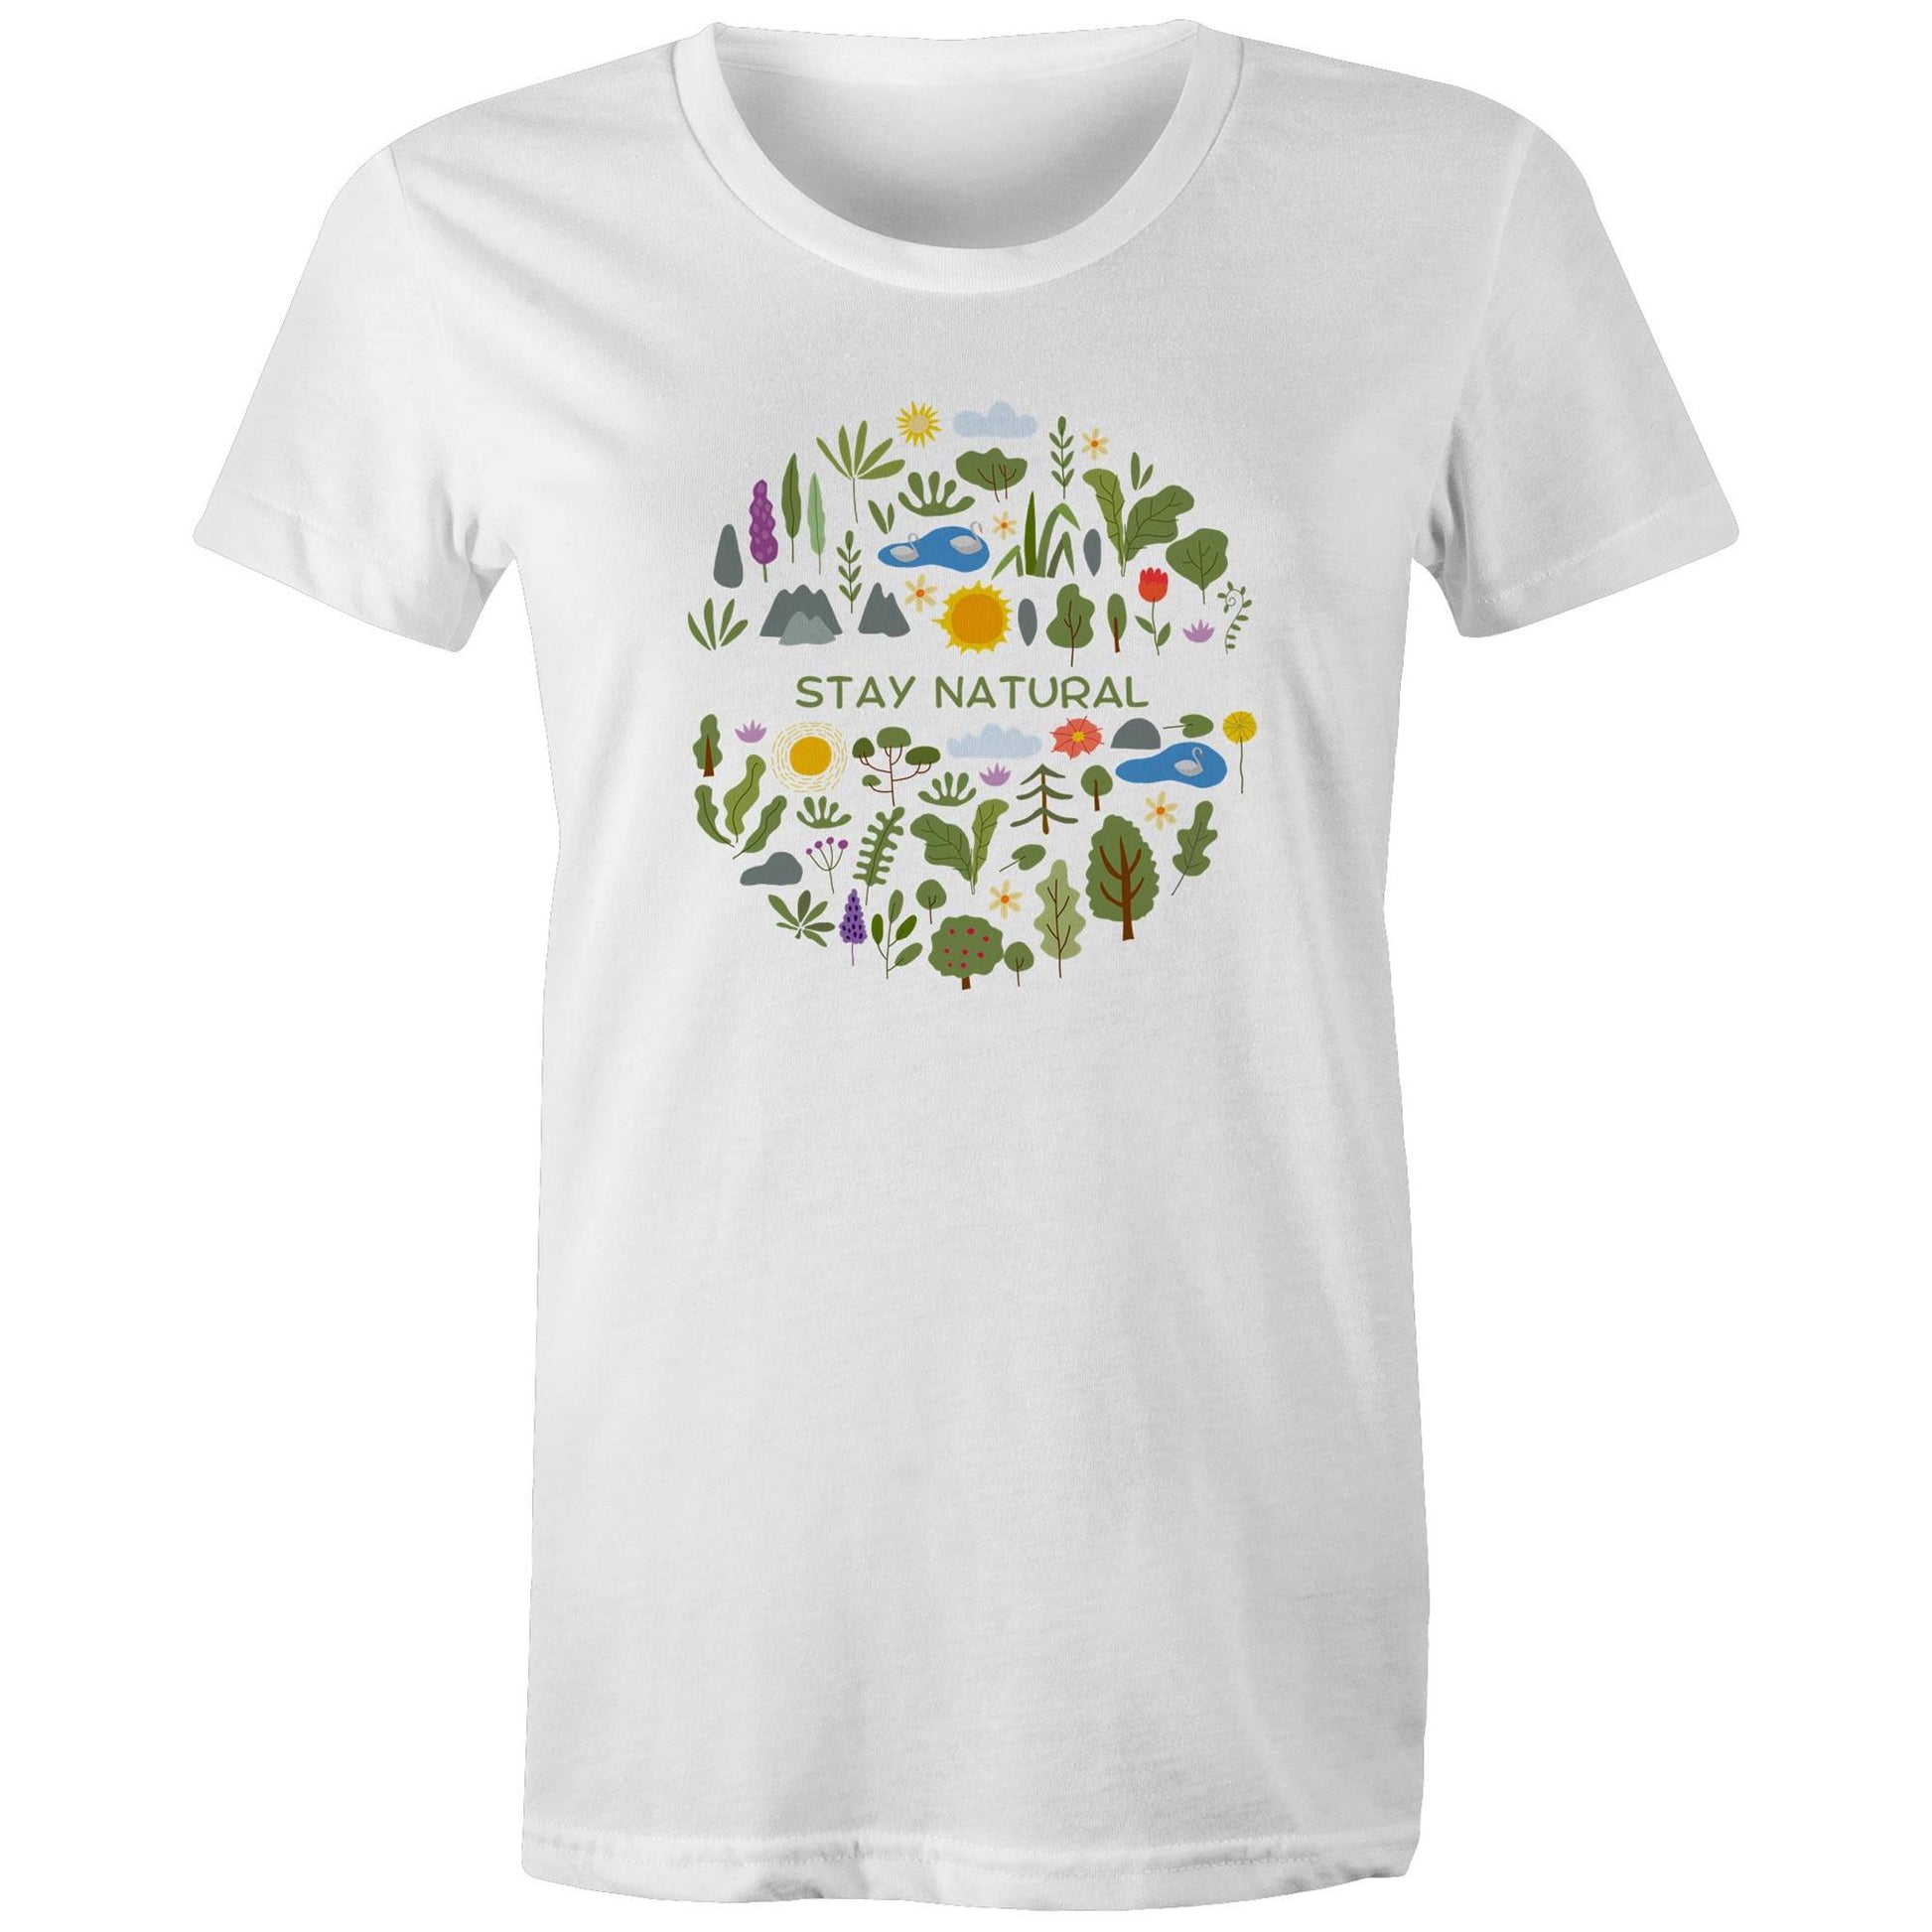 Stay Natural - Womens T-shirt White Womens T-shirt Environment Plants